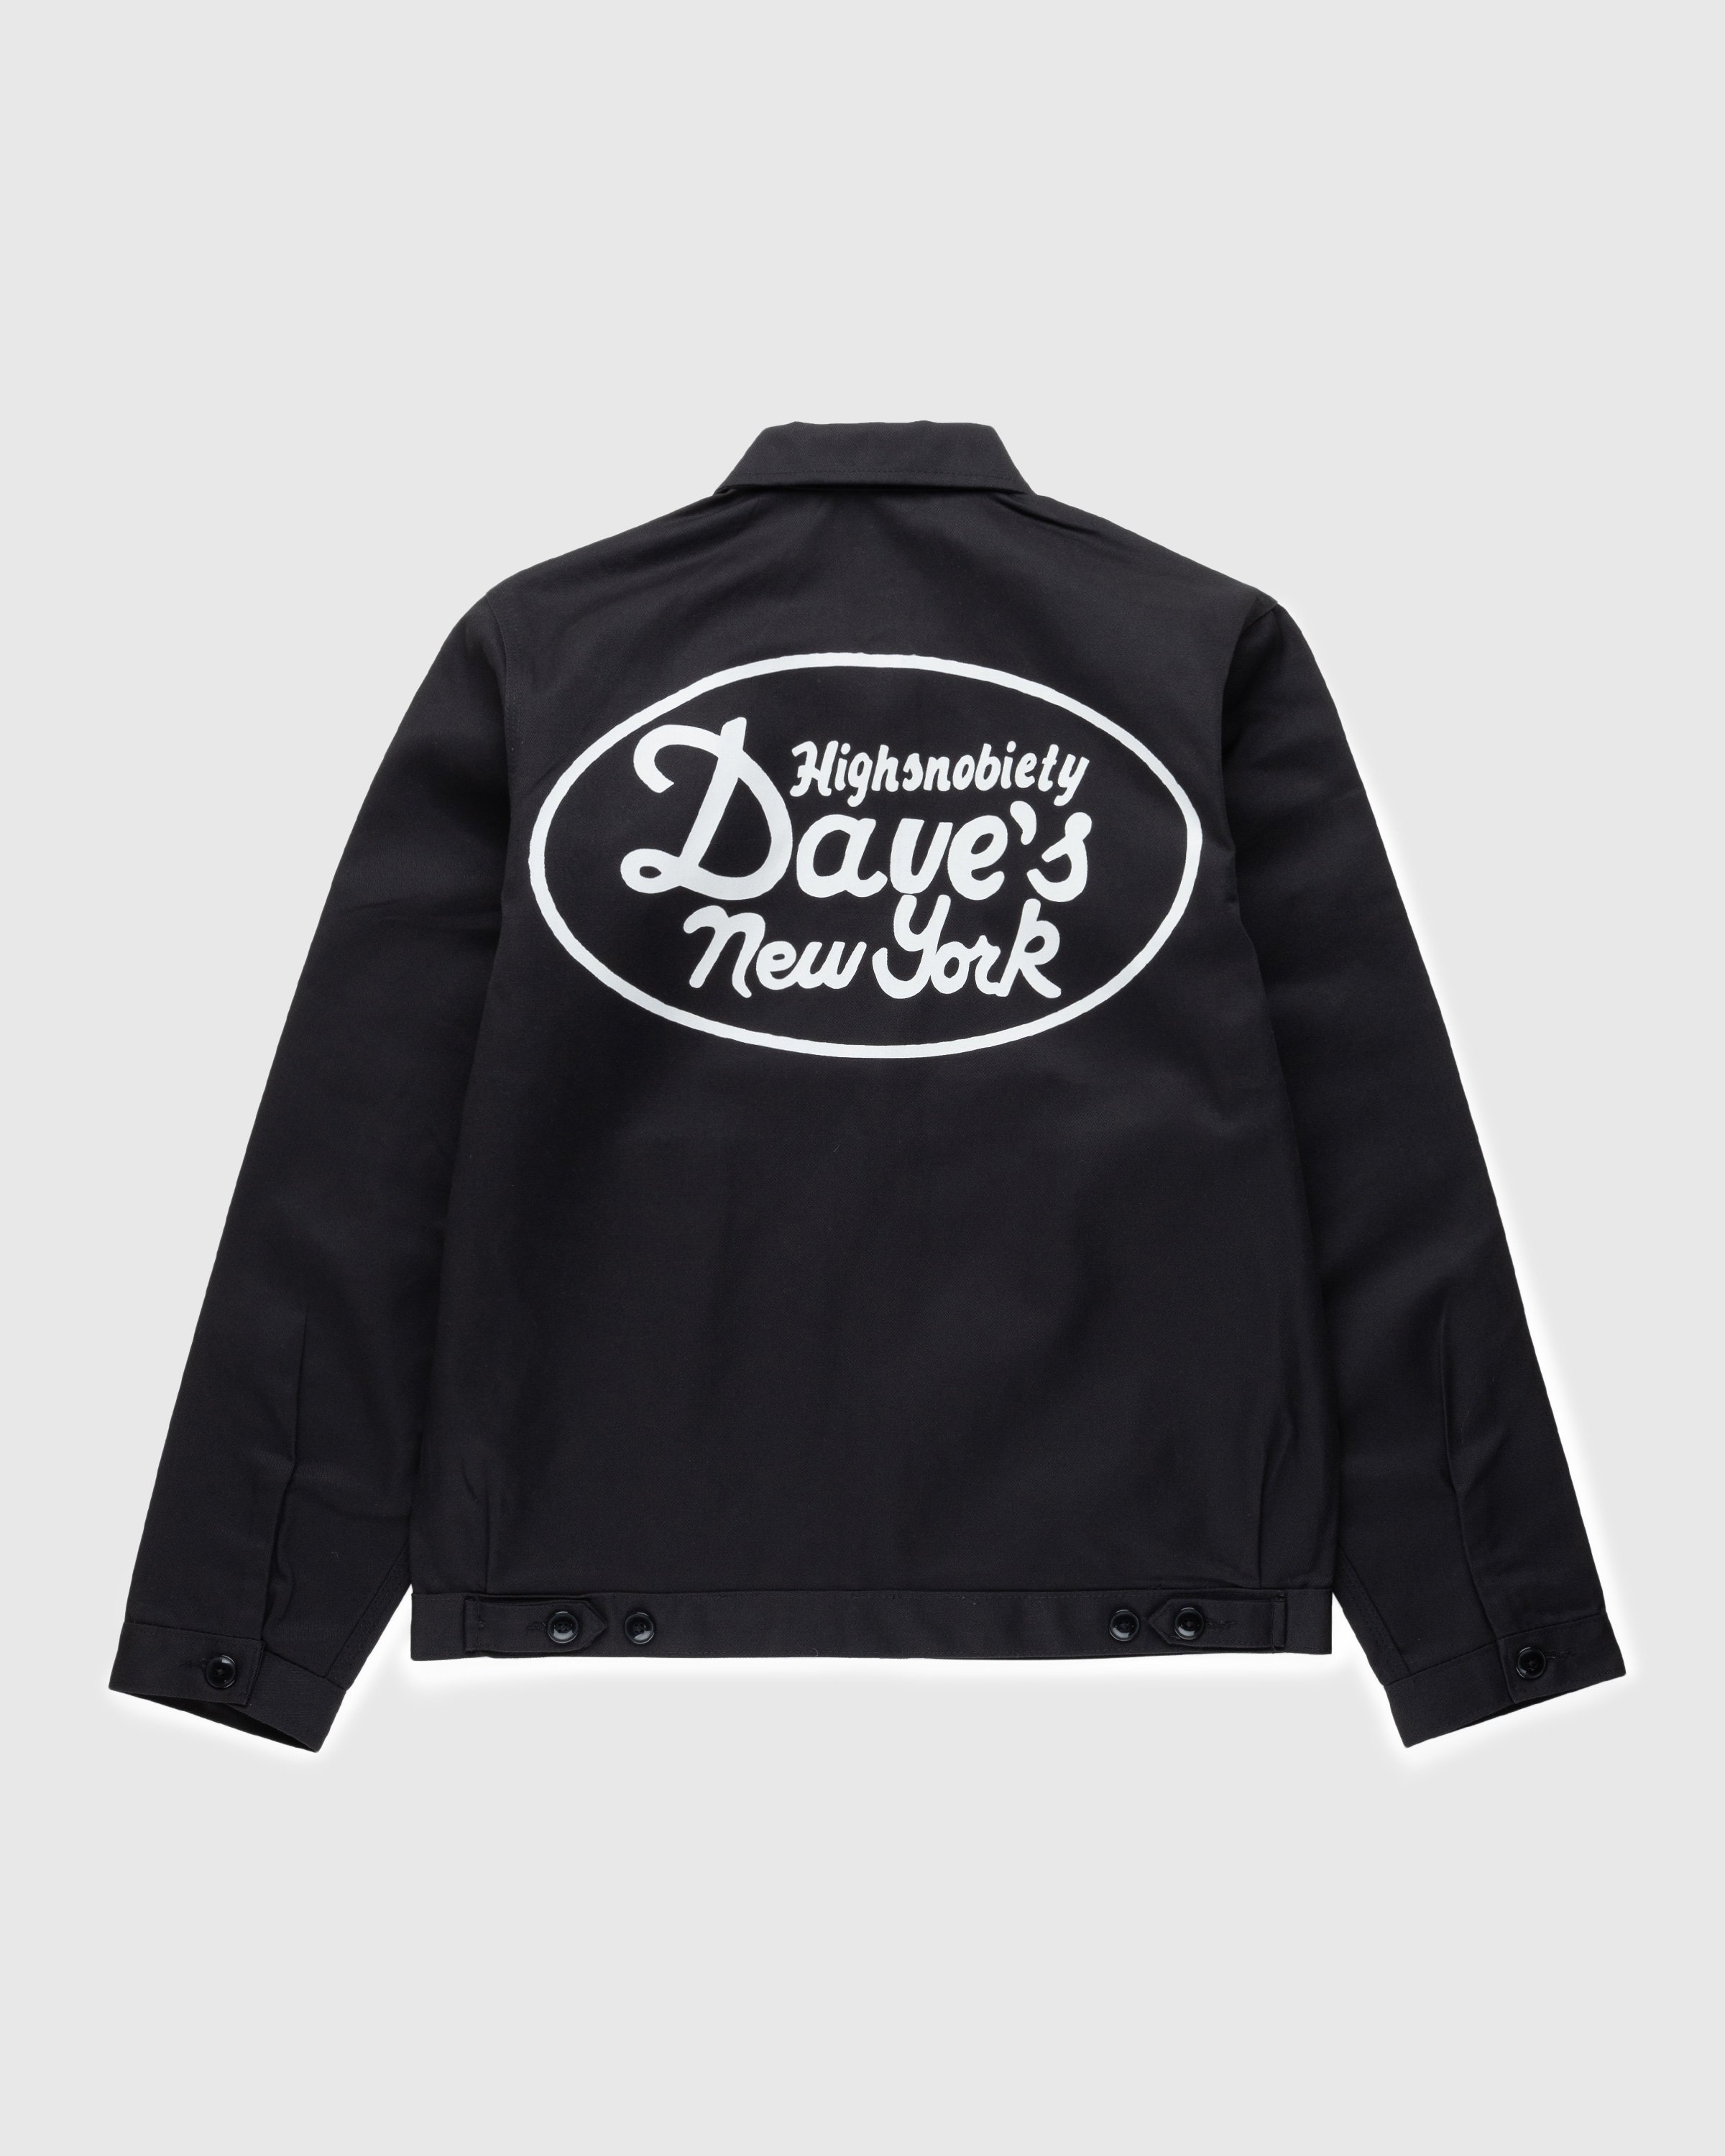 Dave's New York x Highsnobiety - Dickies Eisenhower Jacket - Clothing - Black - Image 1